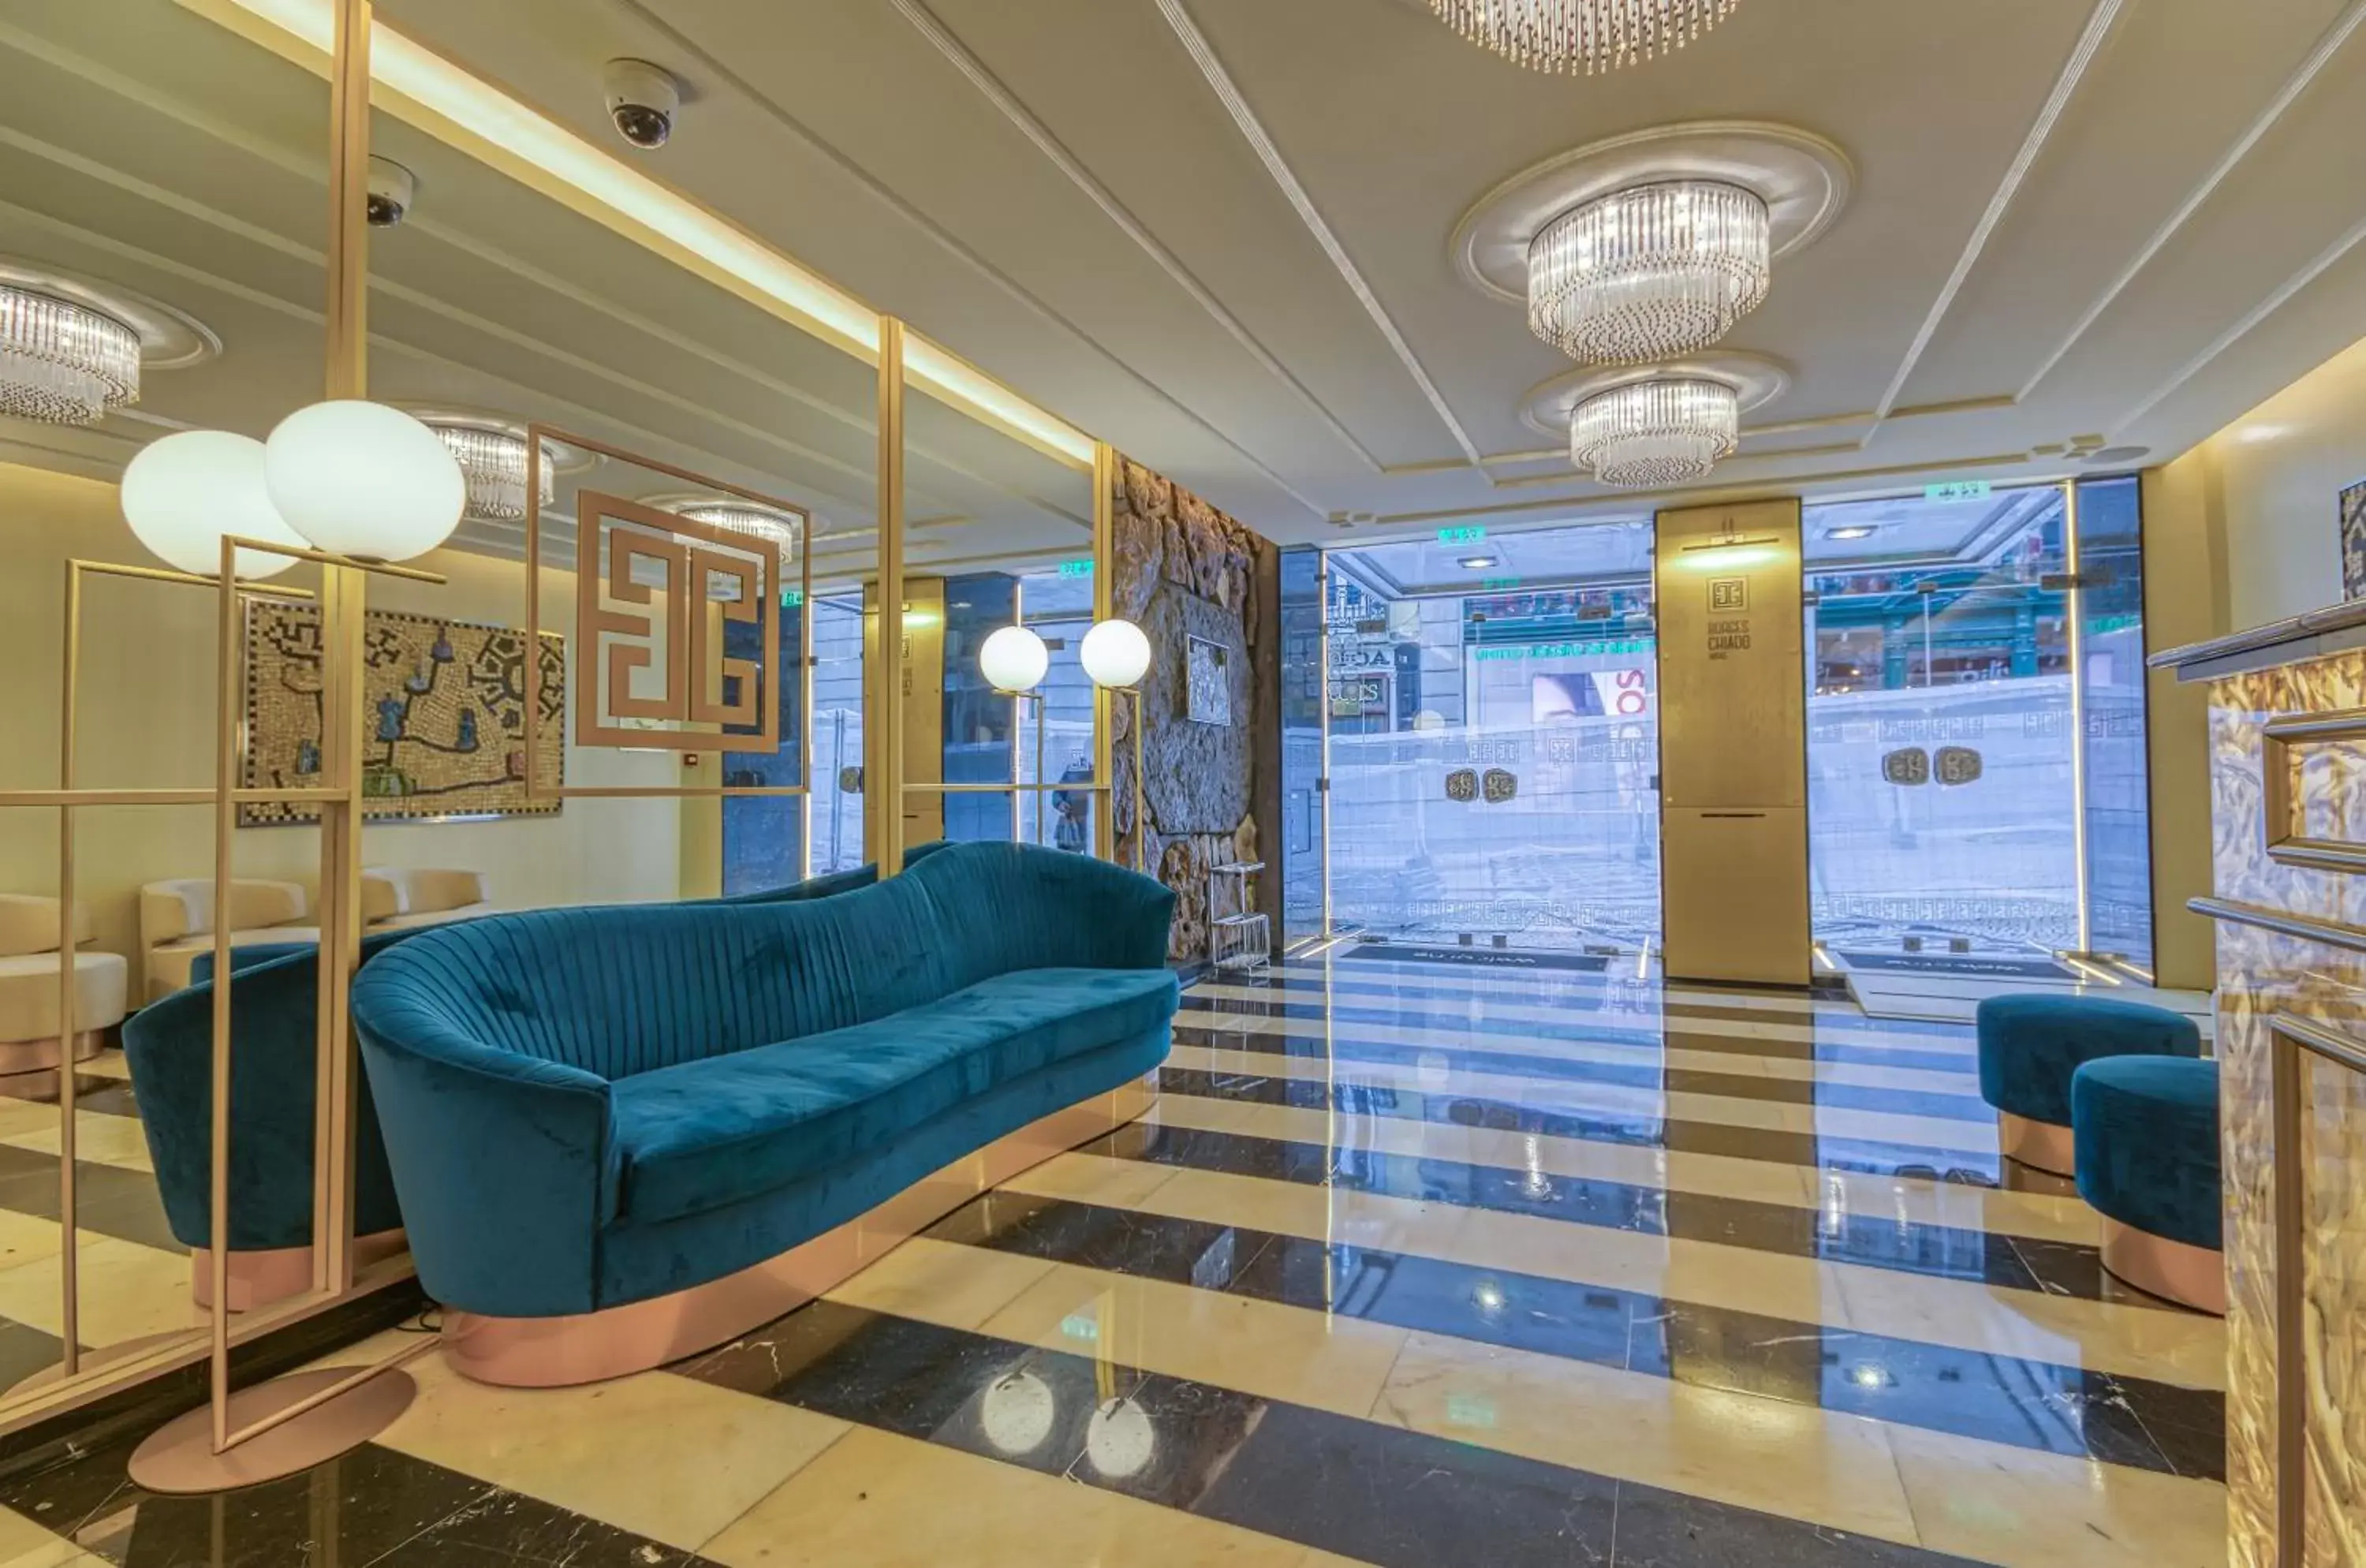 Lobby or reception in Hotel Borges Chiado